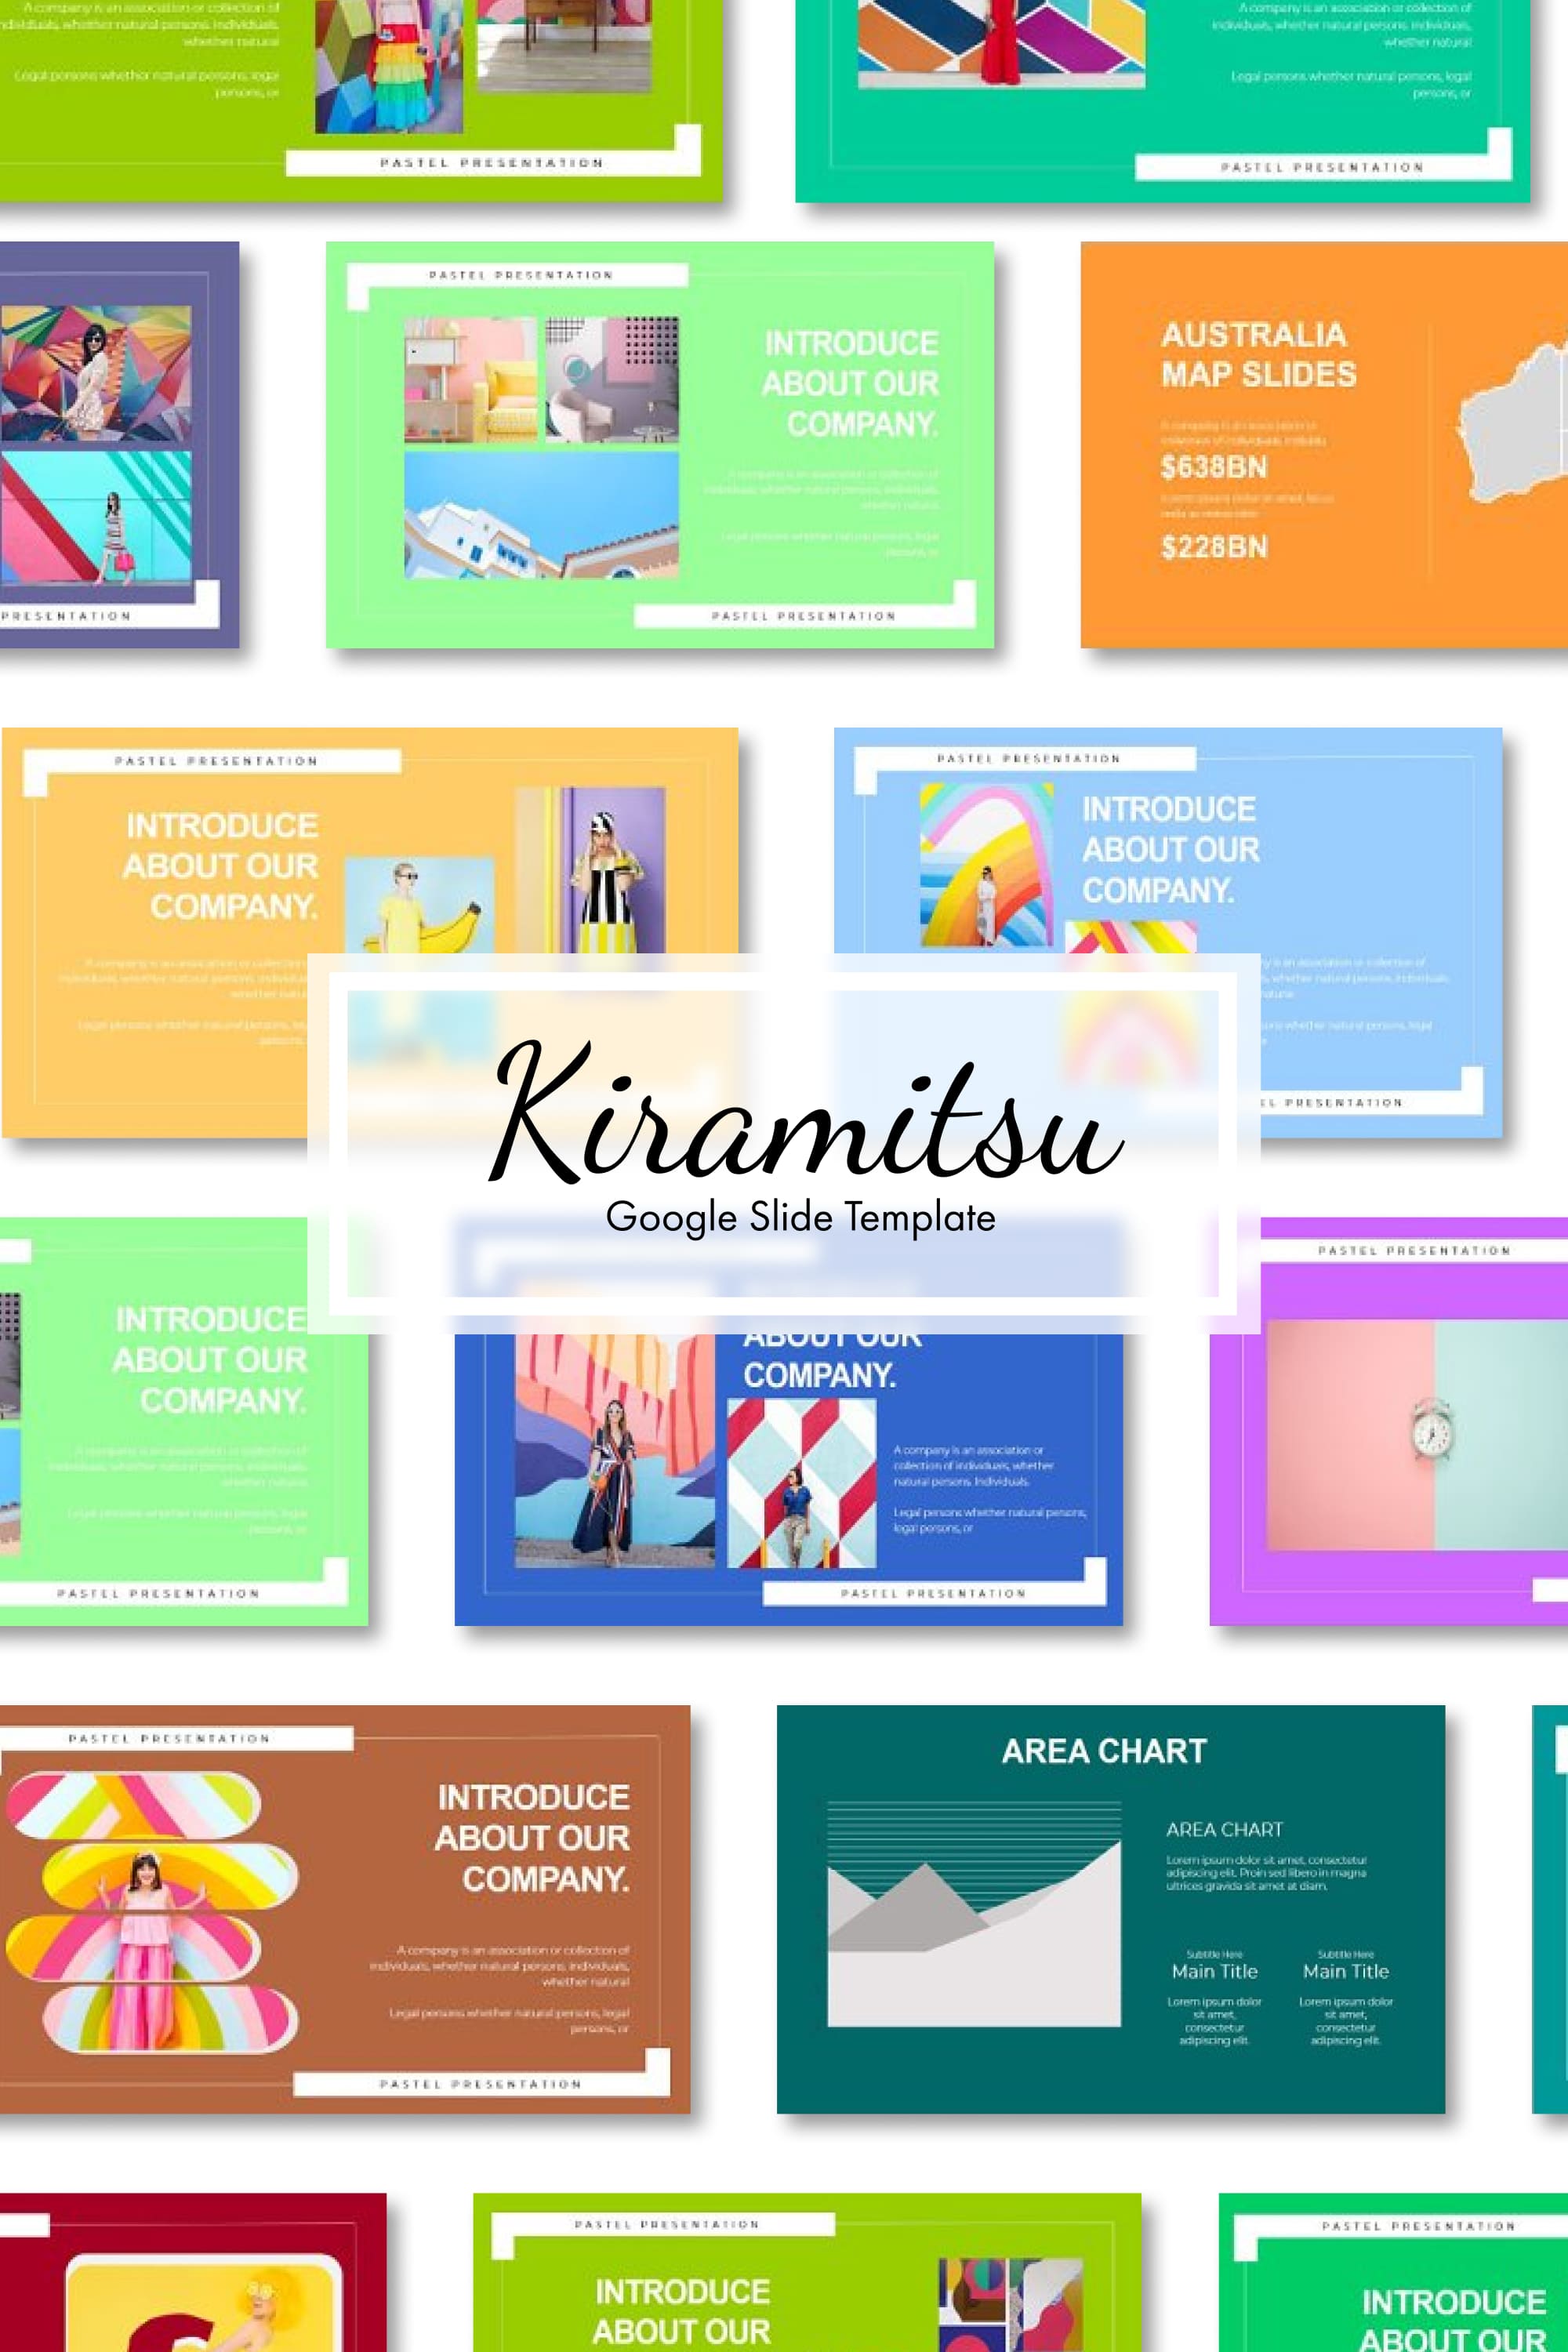 Kiramitsu google slide template - pinterest image preview.